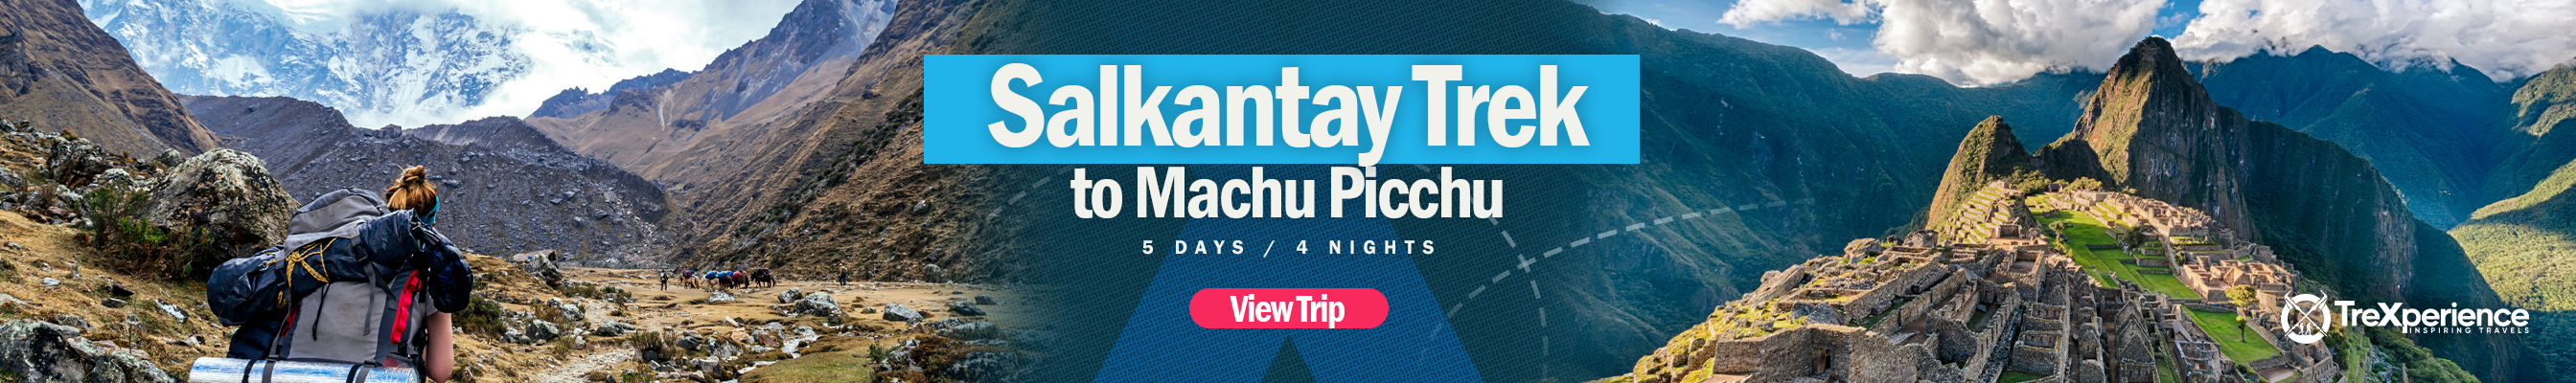 5 day Salkantay trek to Machu Picchu | TreXperience